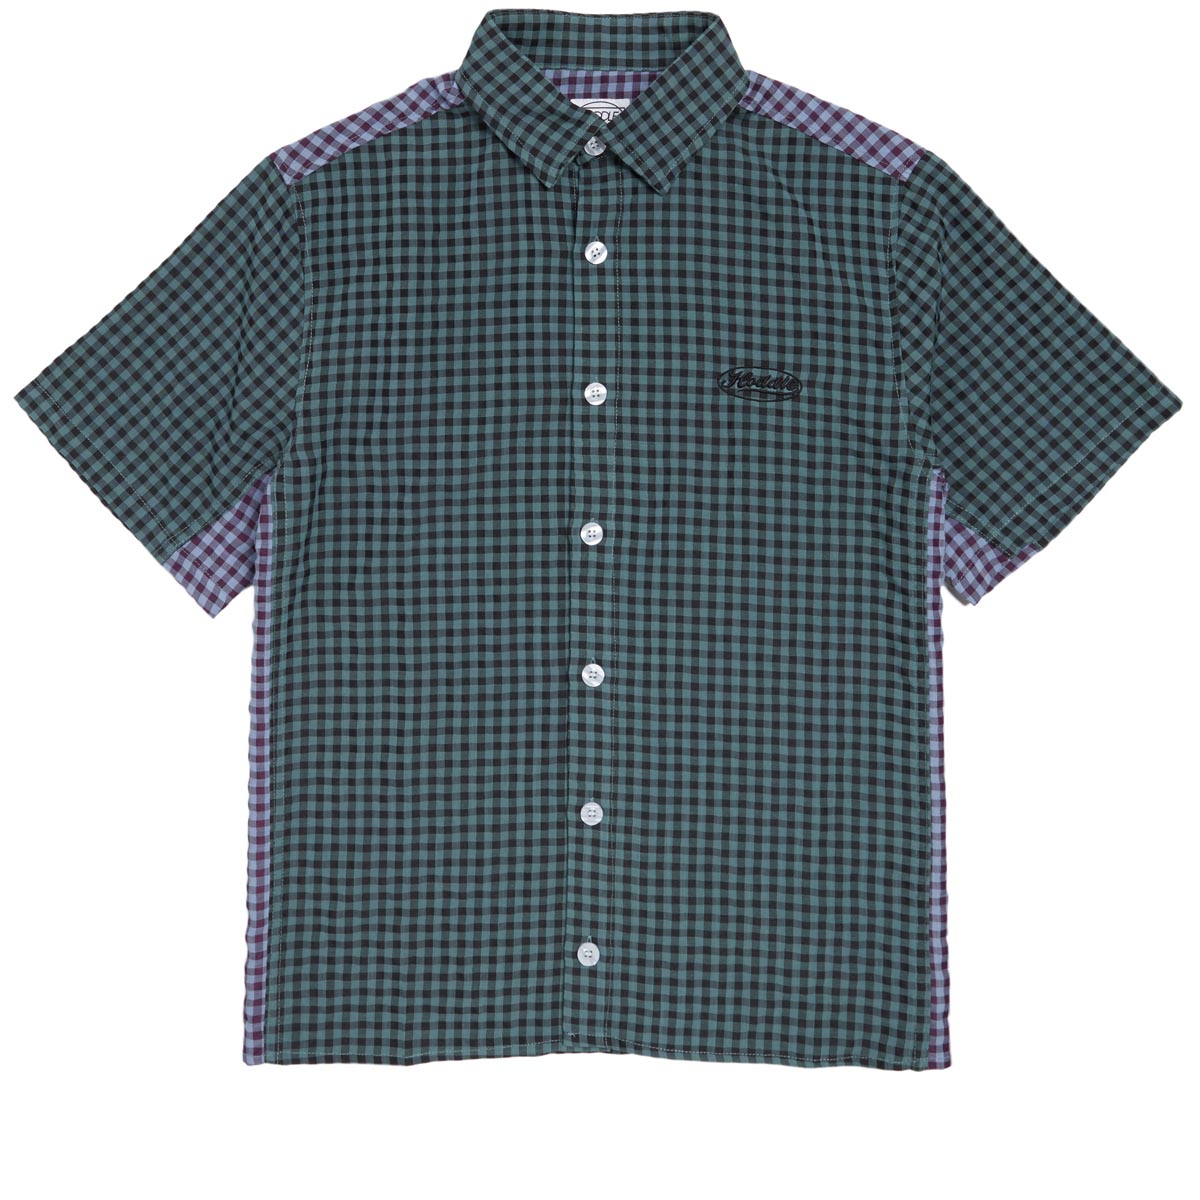 Hoddle Tour Shirt - Blue/Green Check image 1